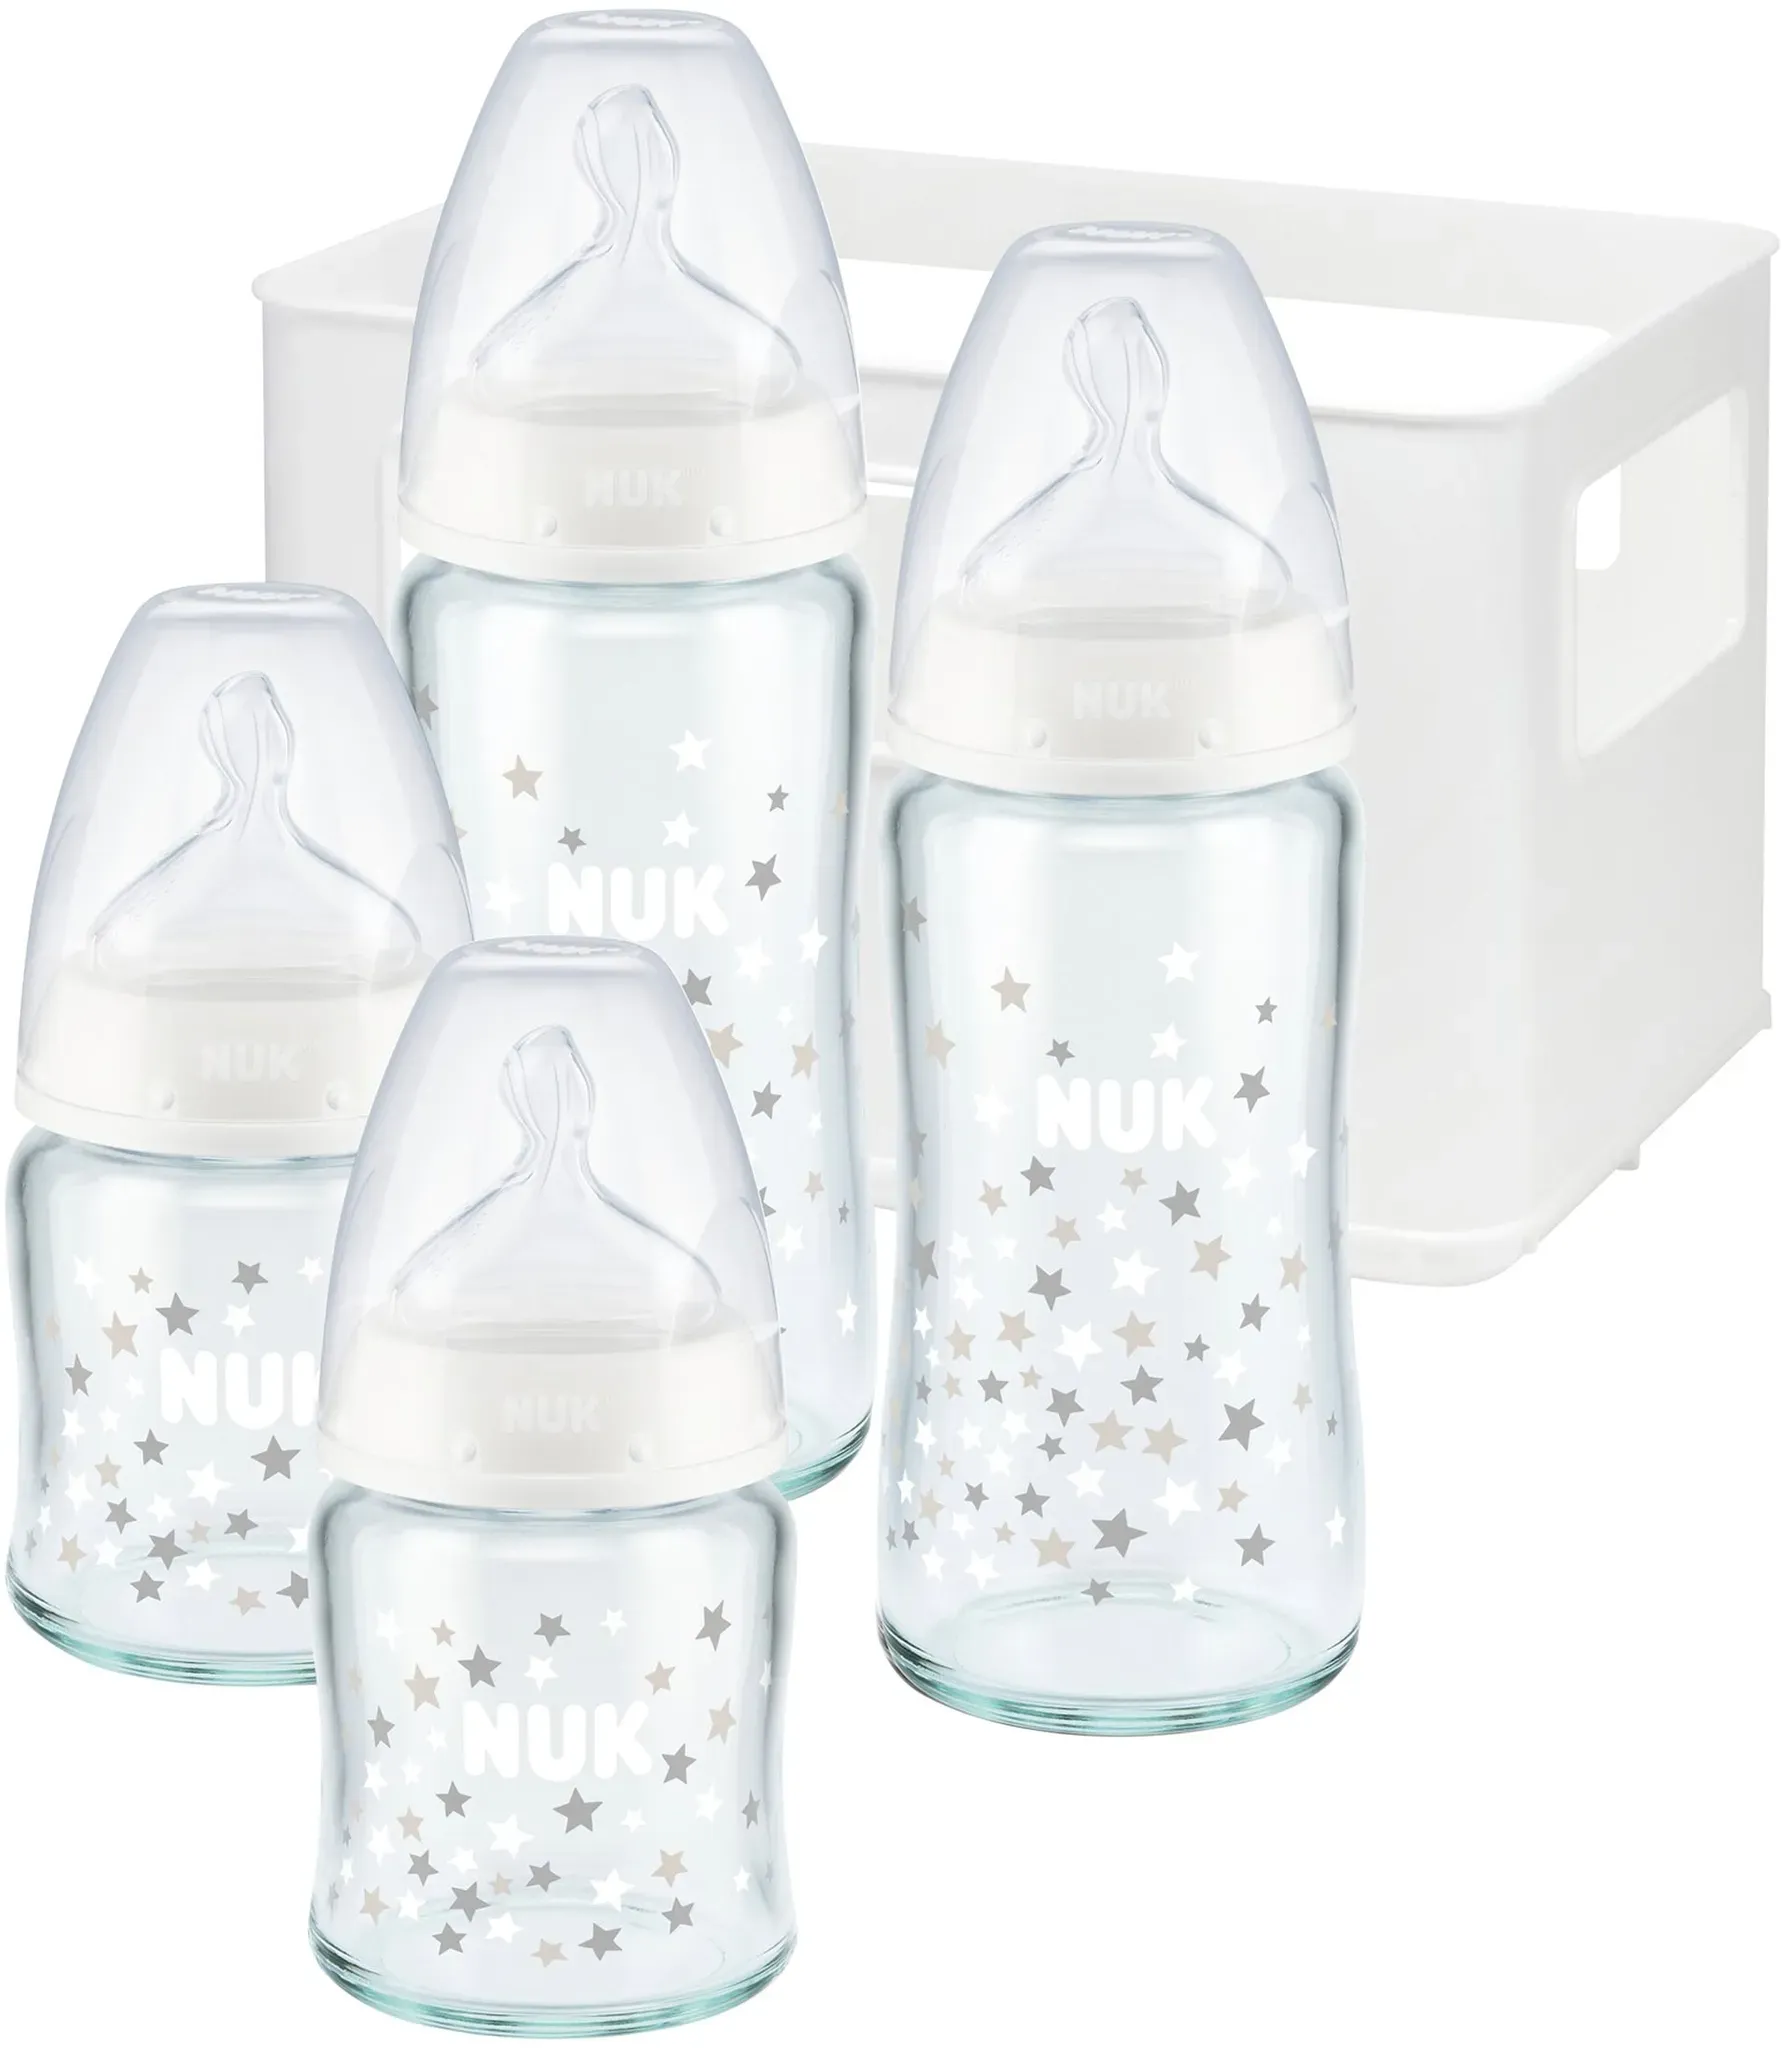 NUK 5-tlg. Babyflaschen-Set First Choice Plus, Anti-Kolik-Weithals, 120-240 ml, Glas und Silikon, 0-6M, weiss